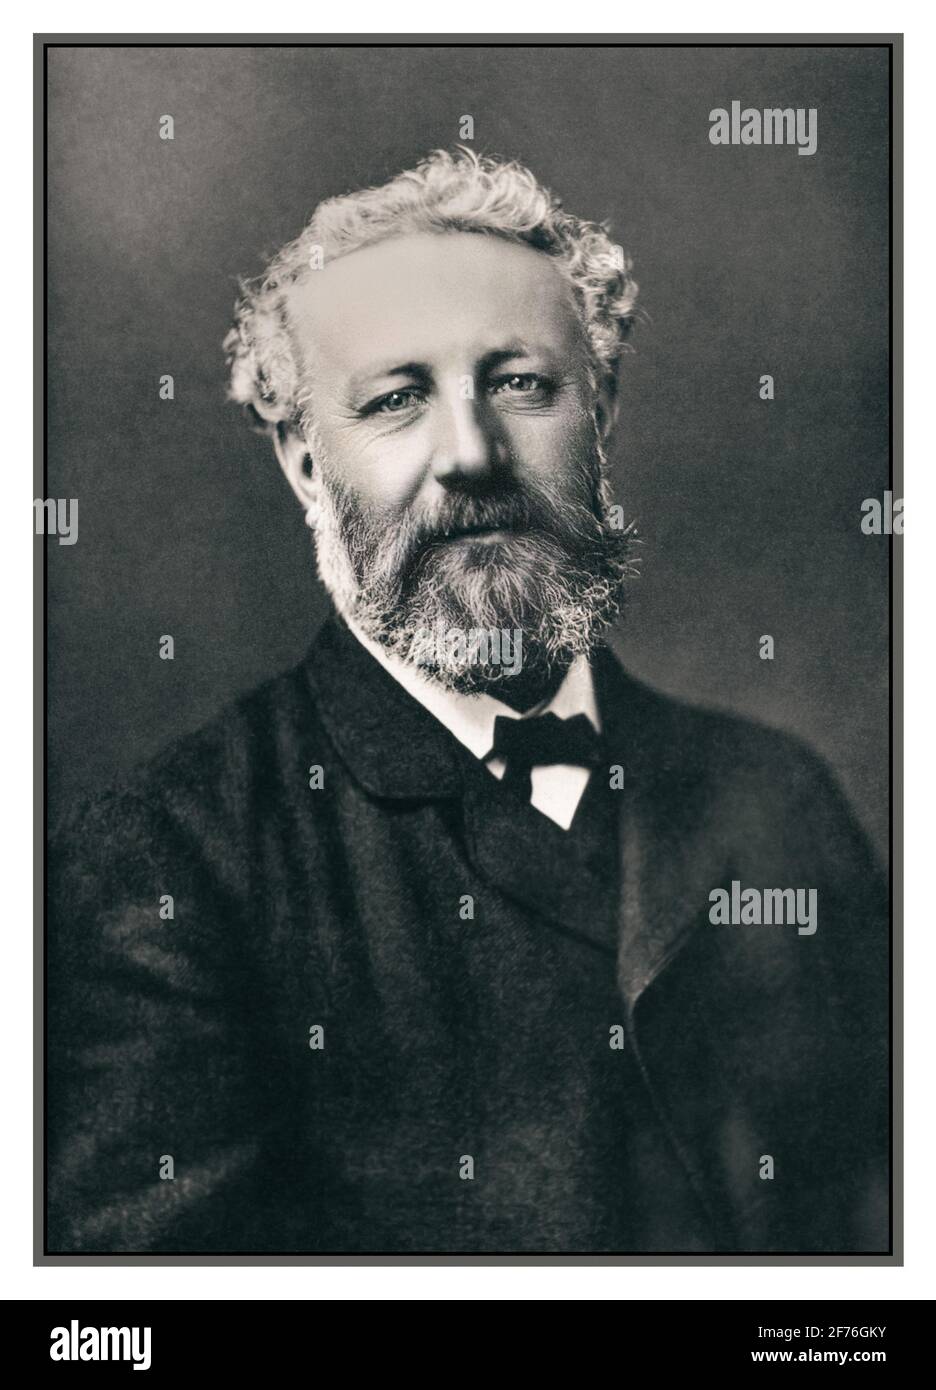 JULES VERNE STUDIO STUDY Evocative Portrait of Jules Verne 1870's by celebrated French photographer Felix Nadar (1820-1910) Paris France Stock Photo